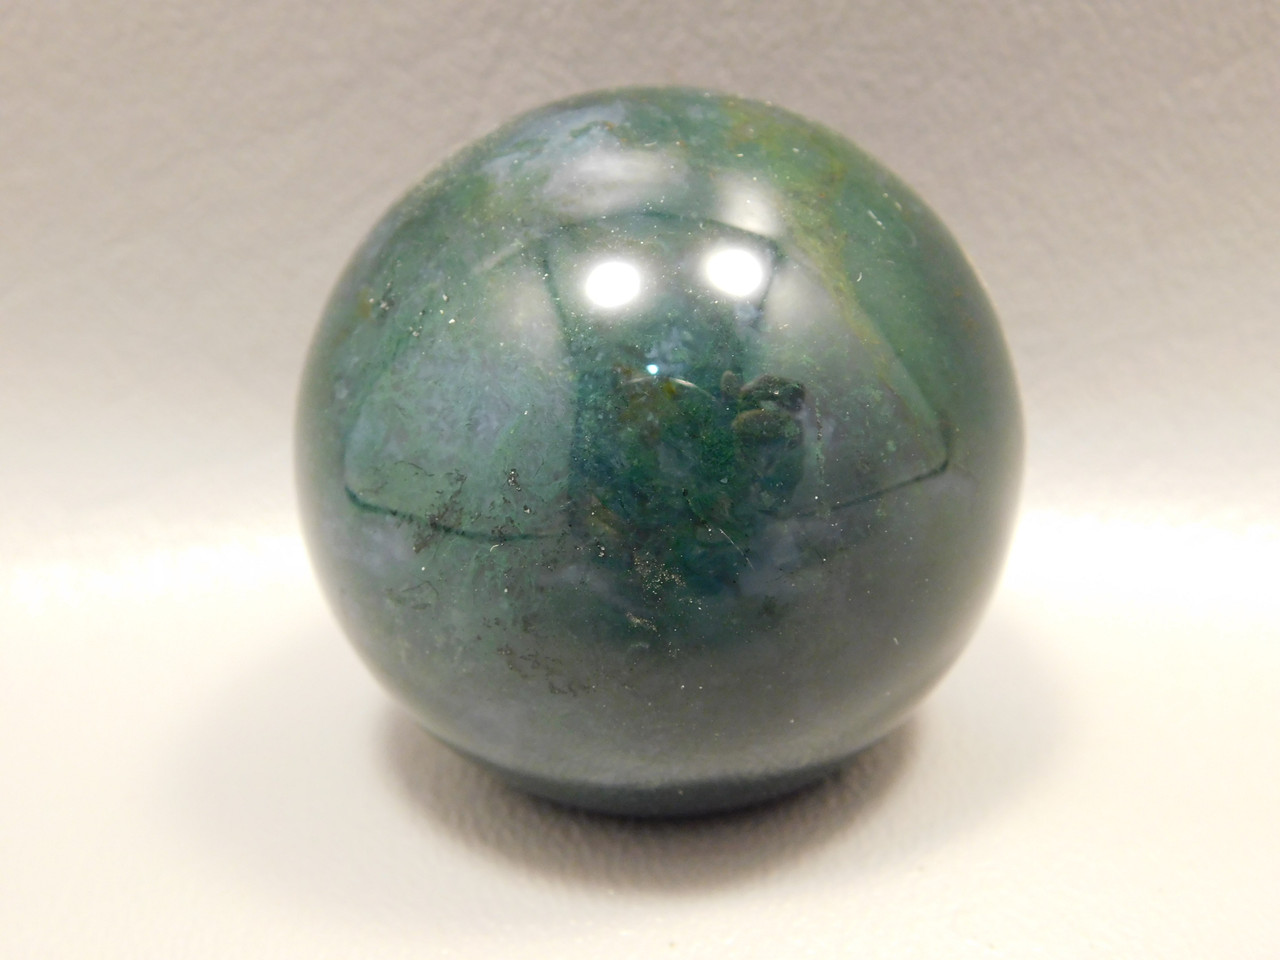 Moss Agate Sphere Stone 1.5 inch Green Rock 40 mm Ball #O2